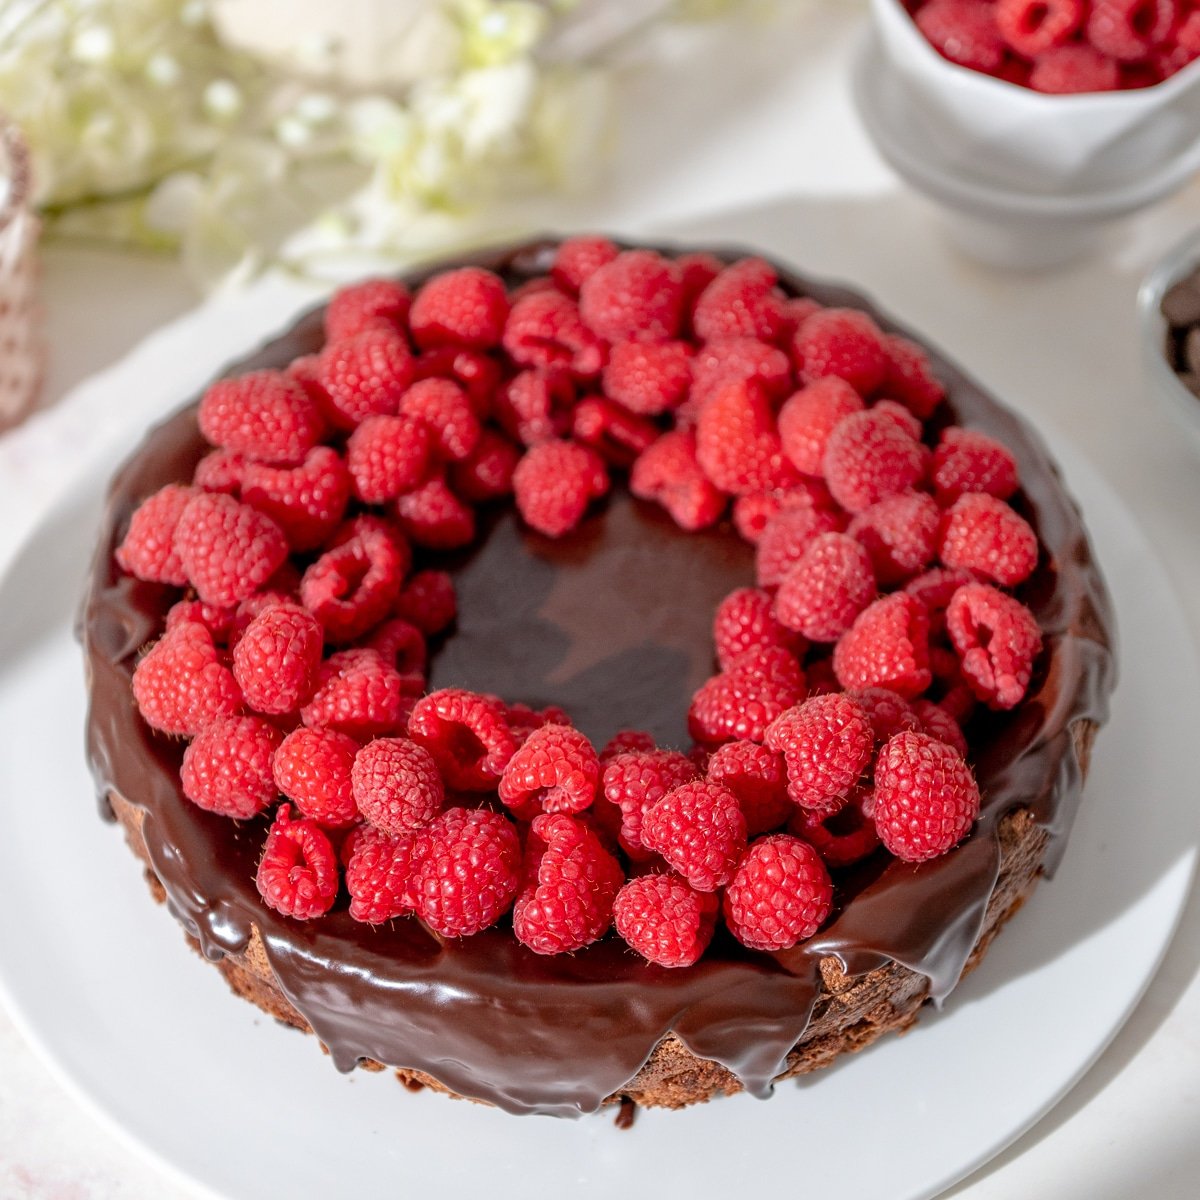 flourless chocolate cake with fresh raspberries